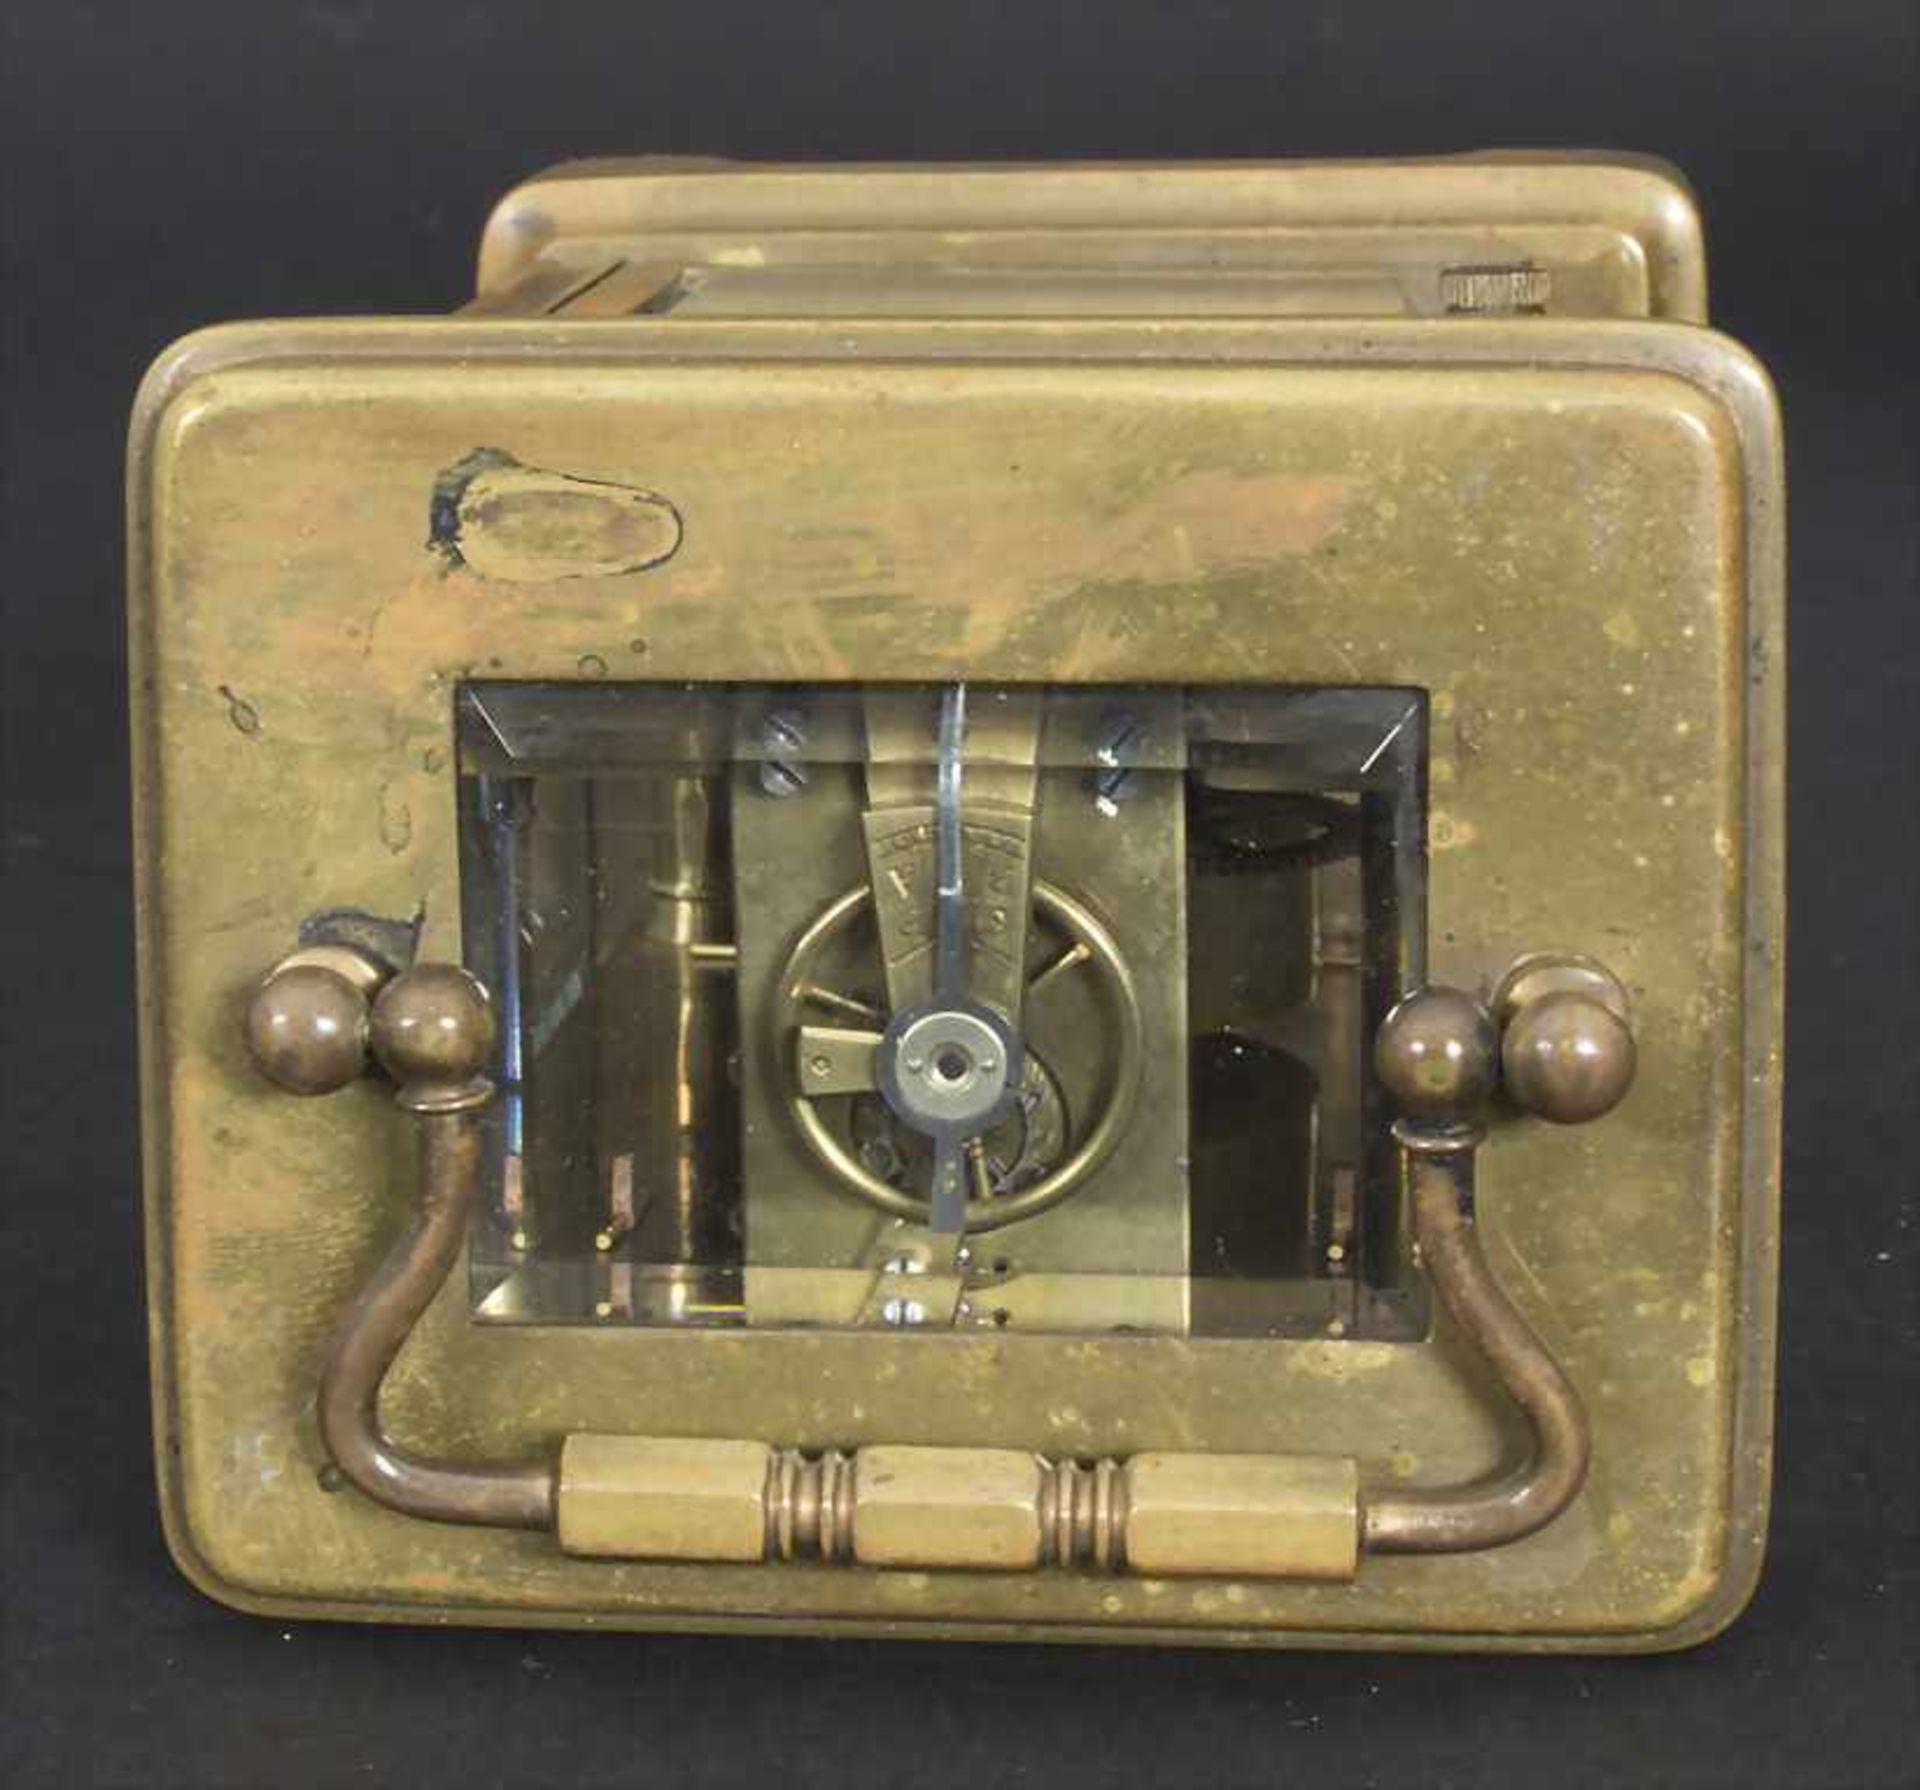 Reiseuhr / A travel clock, um 1900Material: Reiseuhr im Etui, mit Aufzug-Schlüssel,Gehäuse: rundum - Image 6 of 7